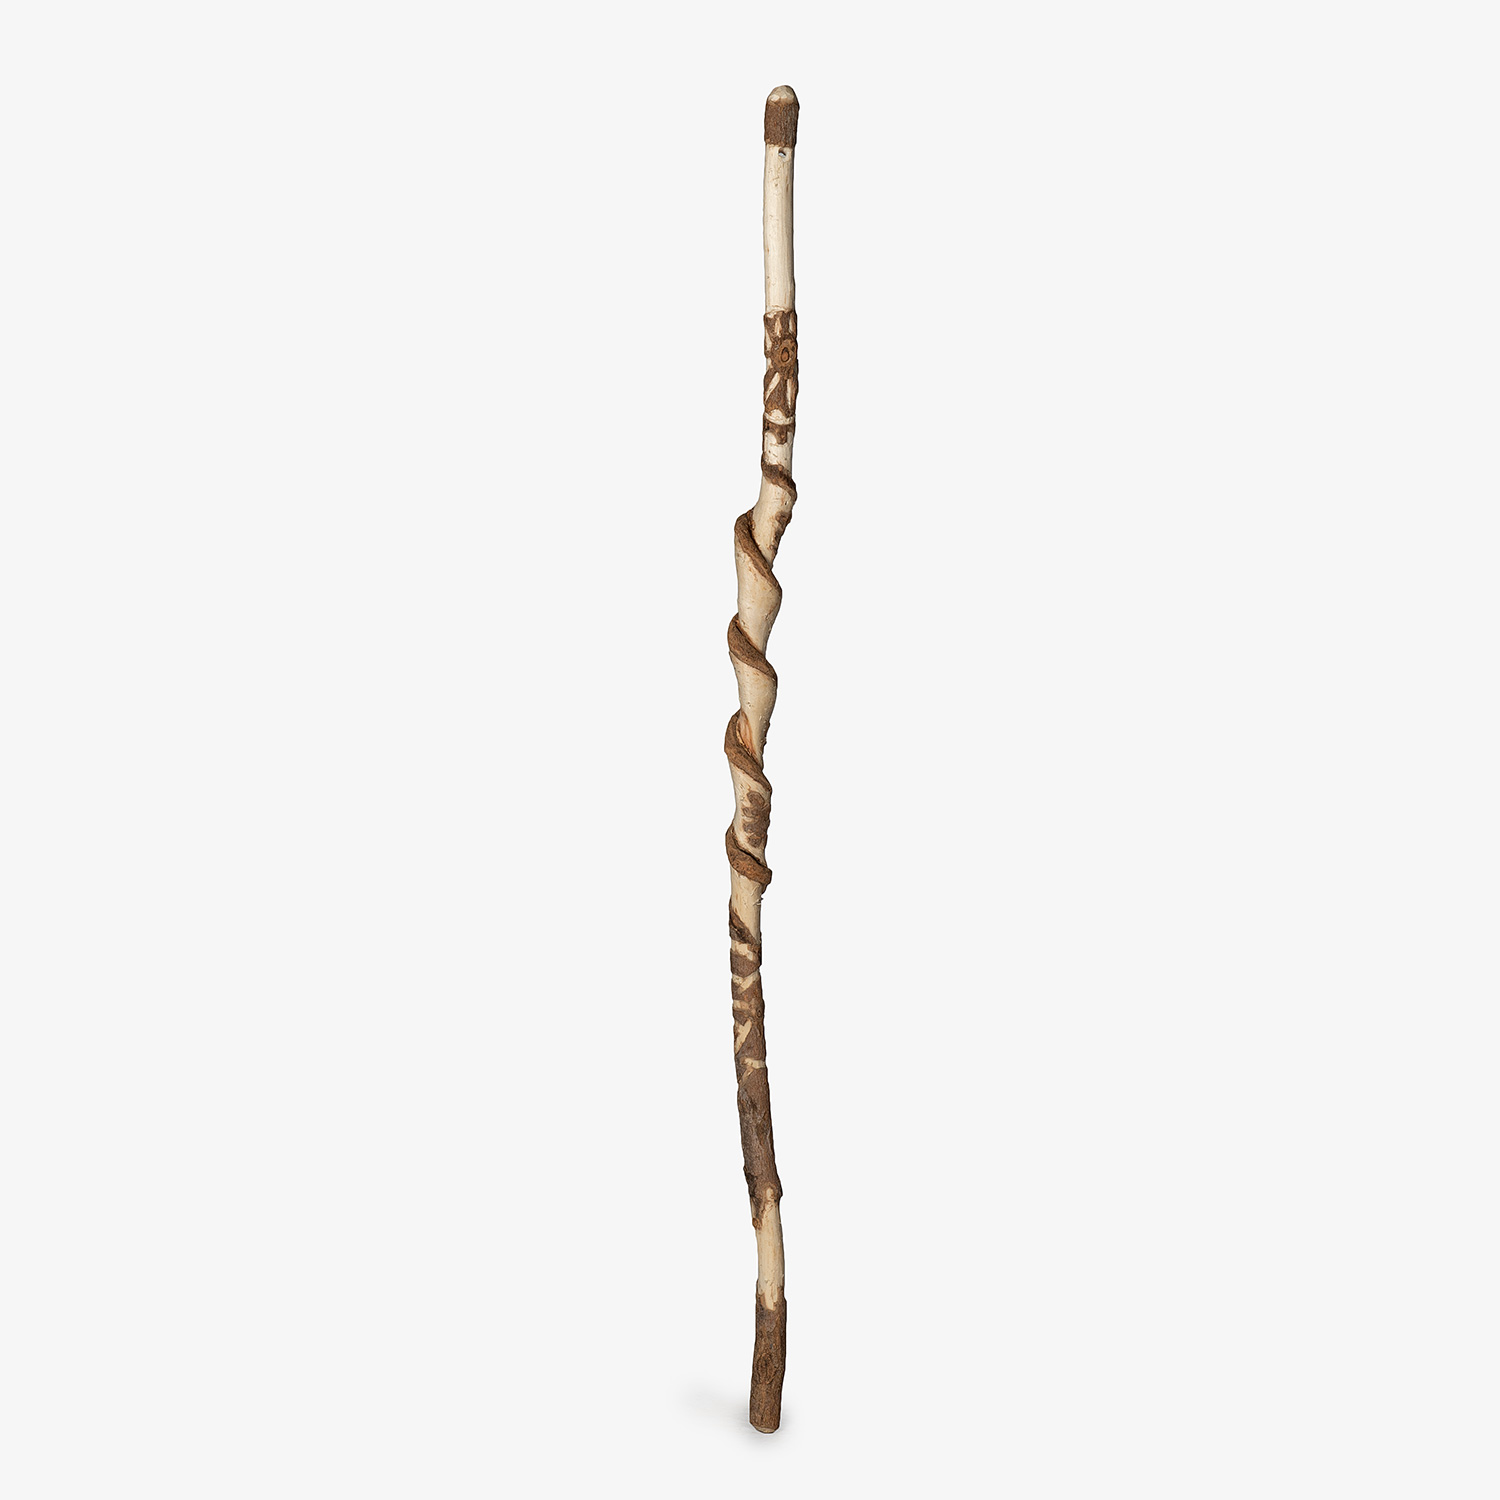 Hiking stick, 122 cm length